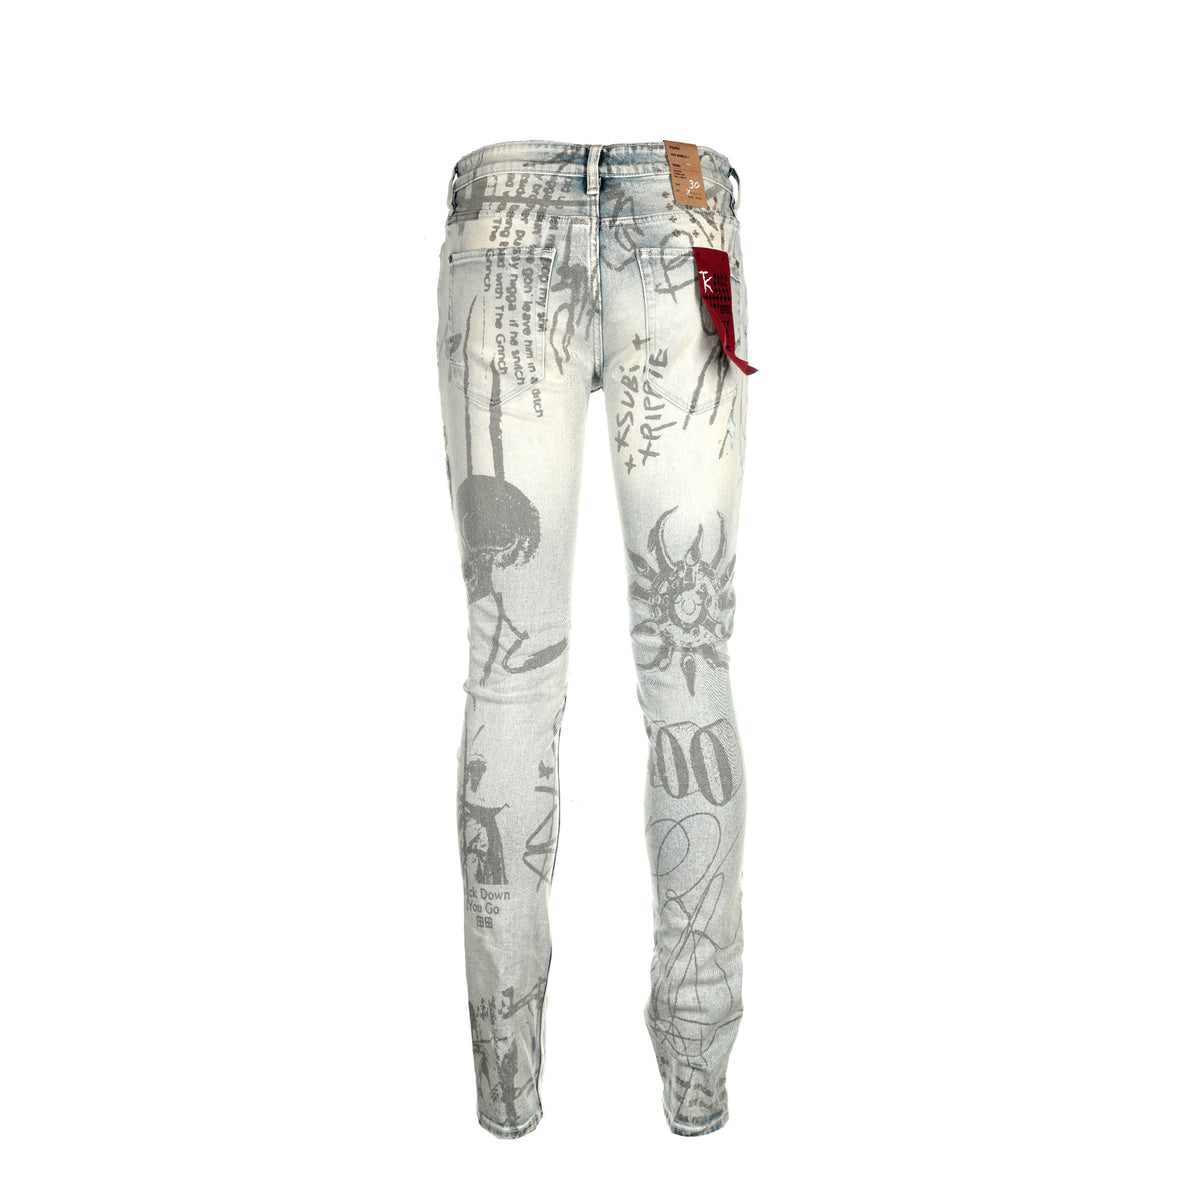 Ksubi Van Winkle X Trippie Redd "Devil's" Men's Jeans - SIZE Boutique